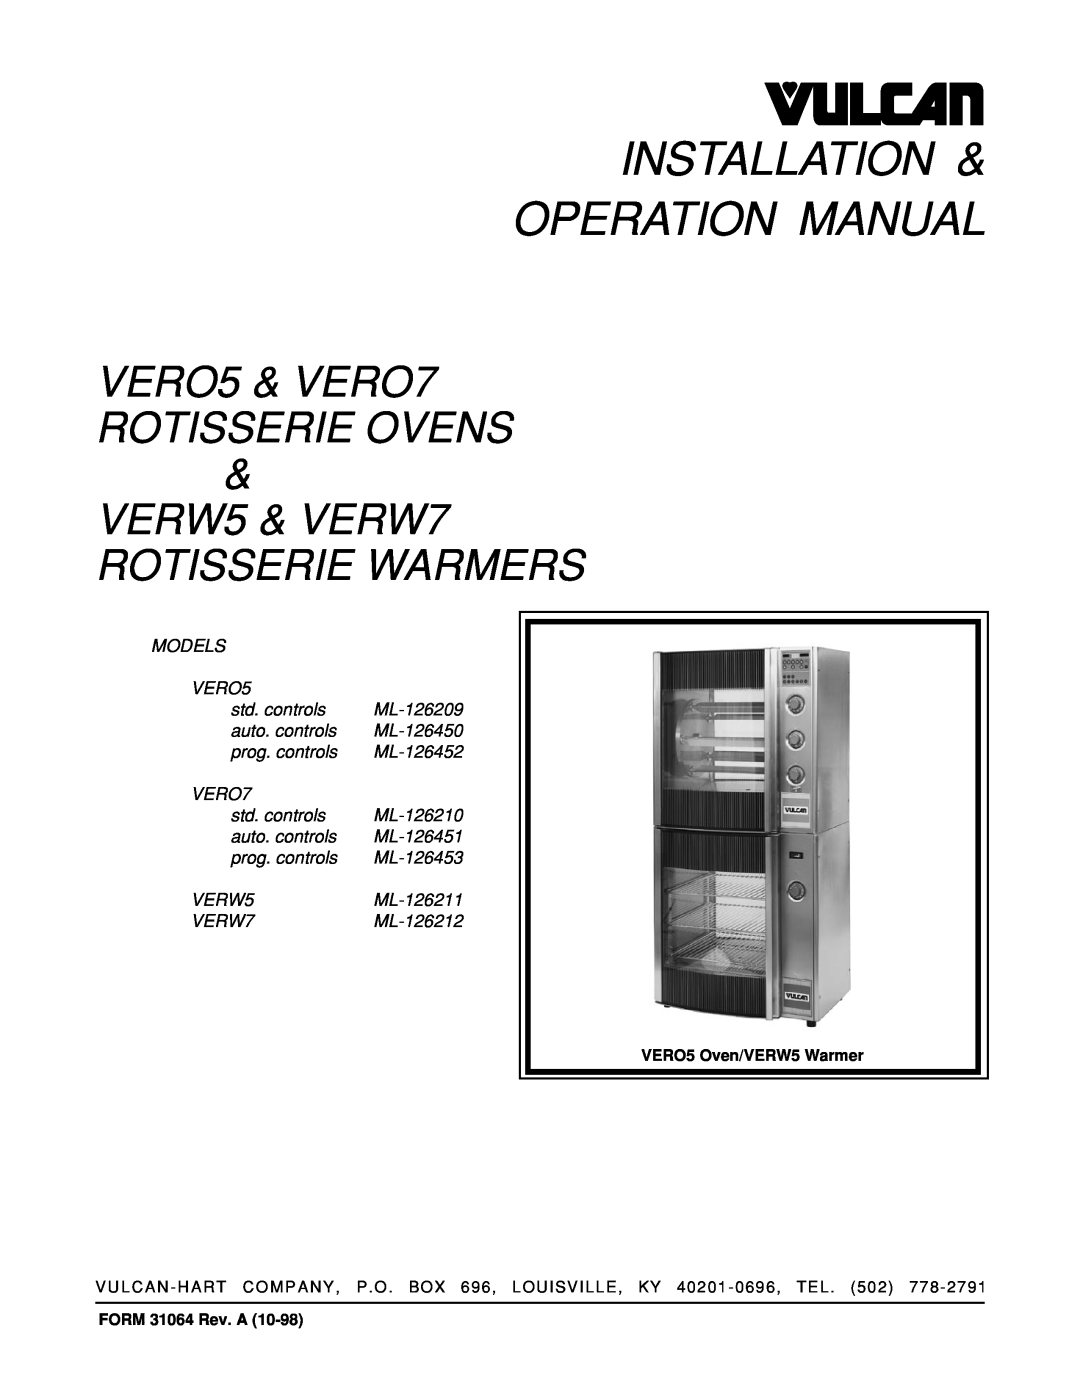 Vulcan-Hart ML-126451, ML-126210 manual Installation & Operation Manual, VERO5 & VERO7 ROTISSERIE OVENS & VERW5 & VERW7 